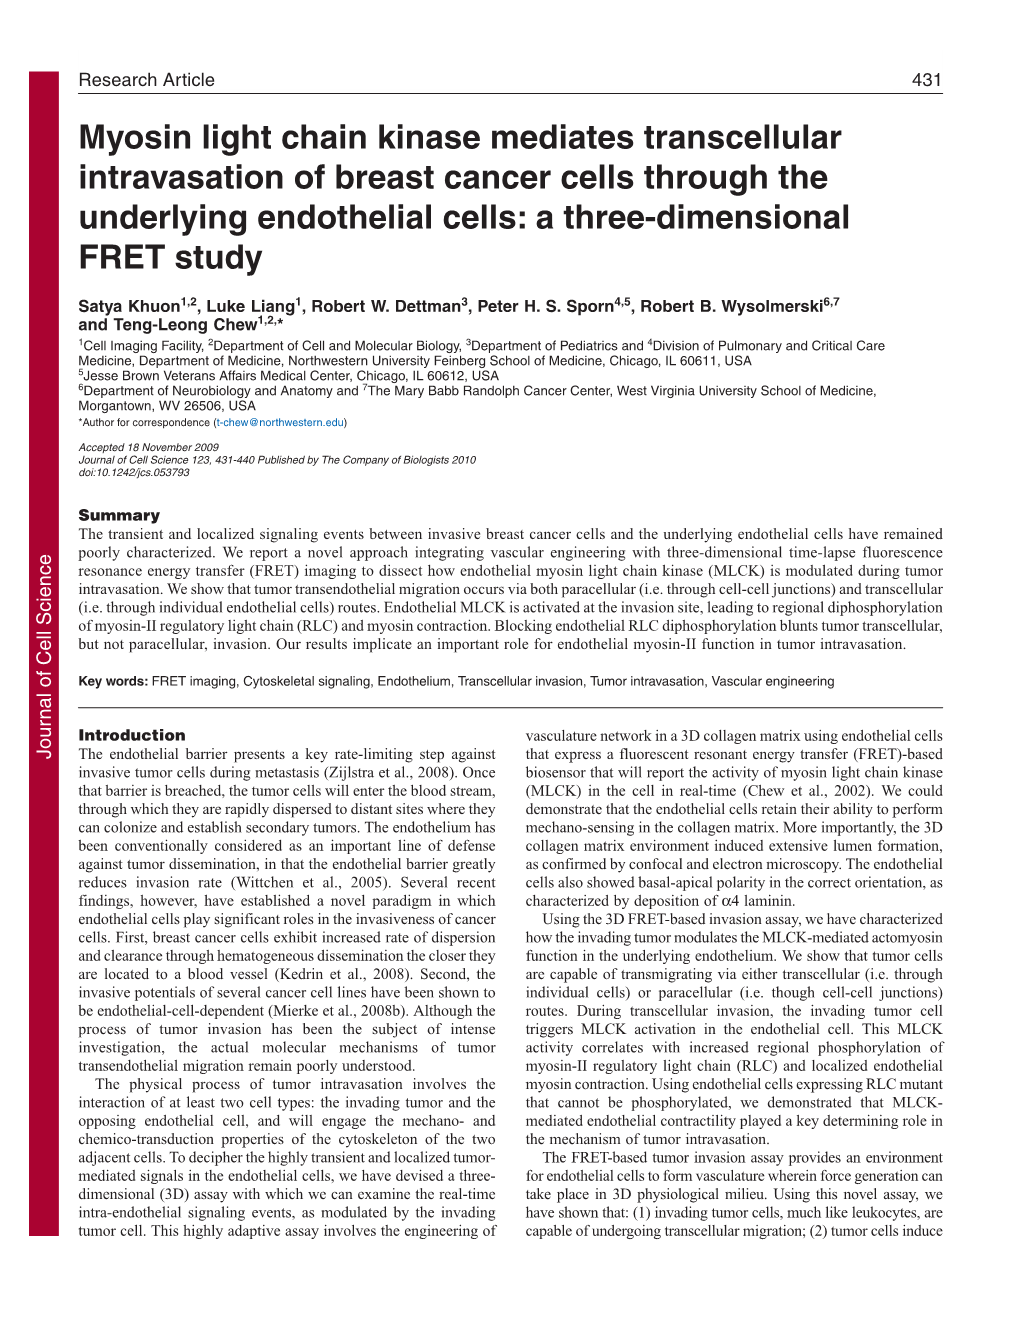 Myosin Light Chain Kinase Mediates Transcellular Intravasation of Breast Cancer Cells Through the Underlying Endothelial Cells: a Three-Dimensional FRET Study